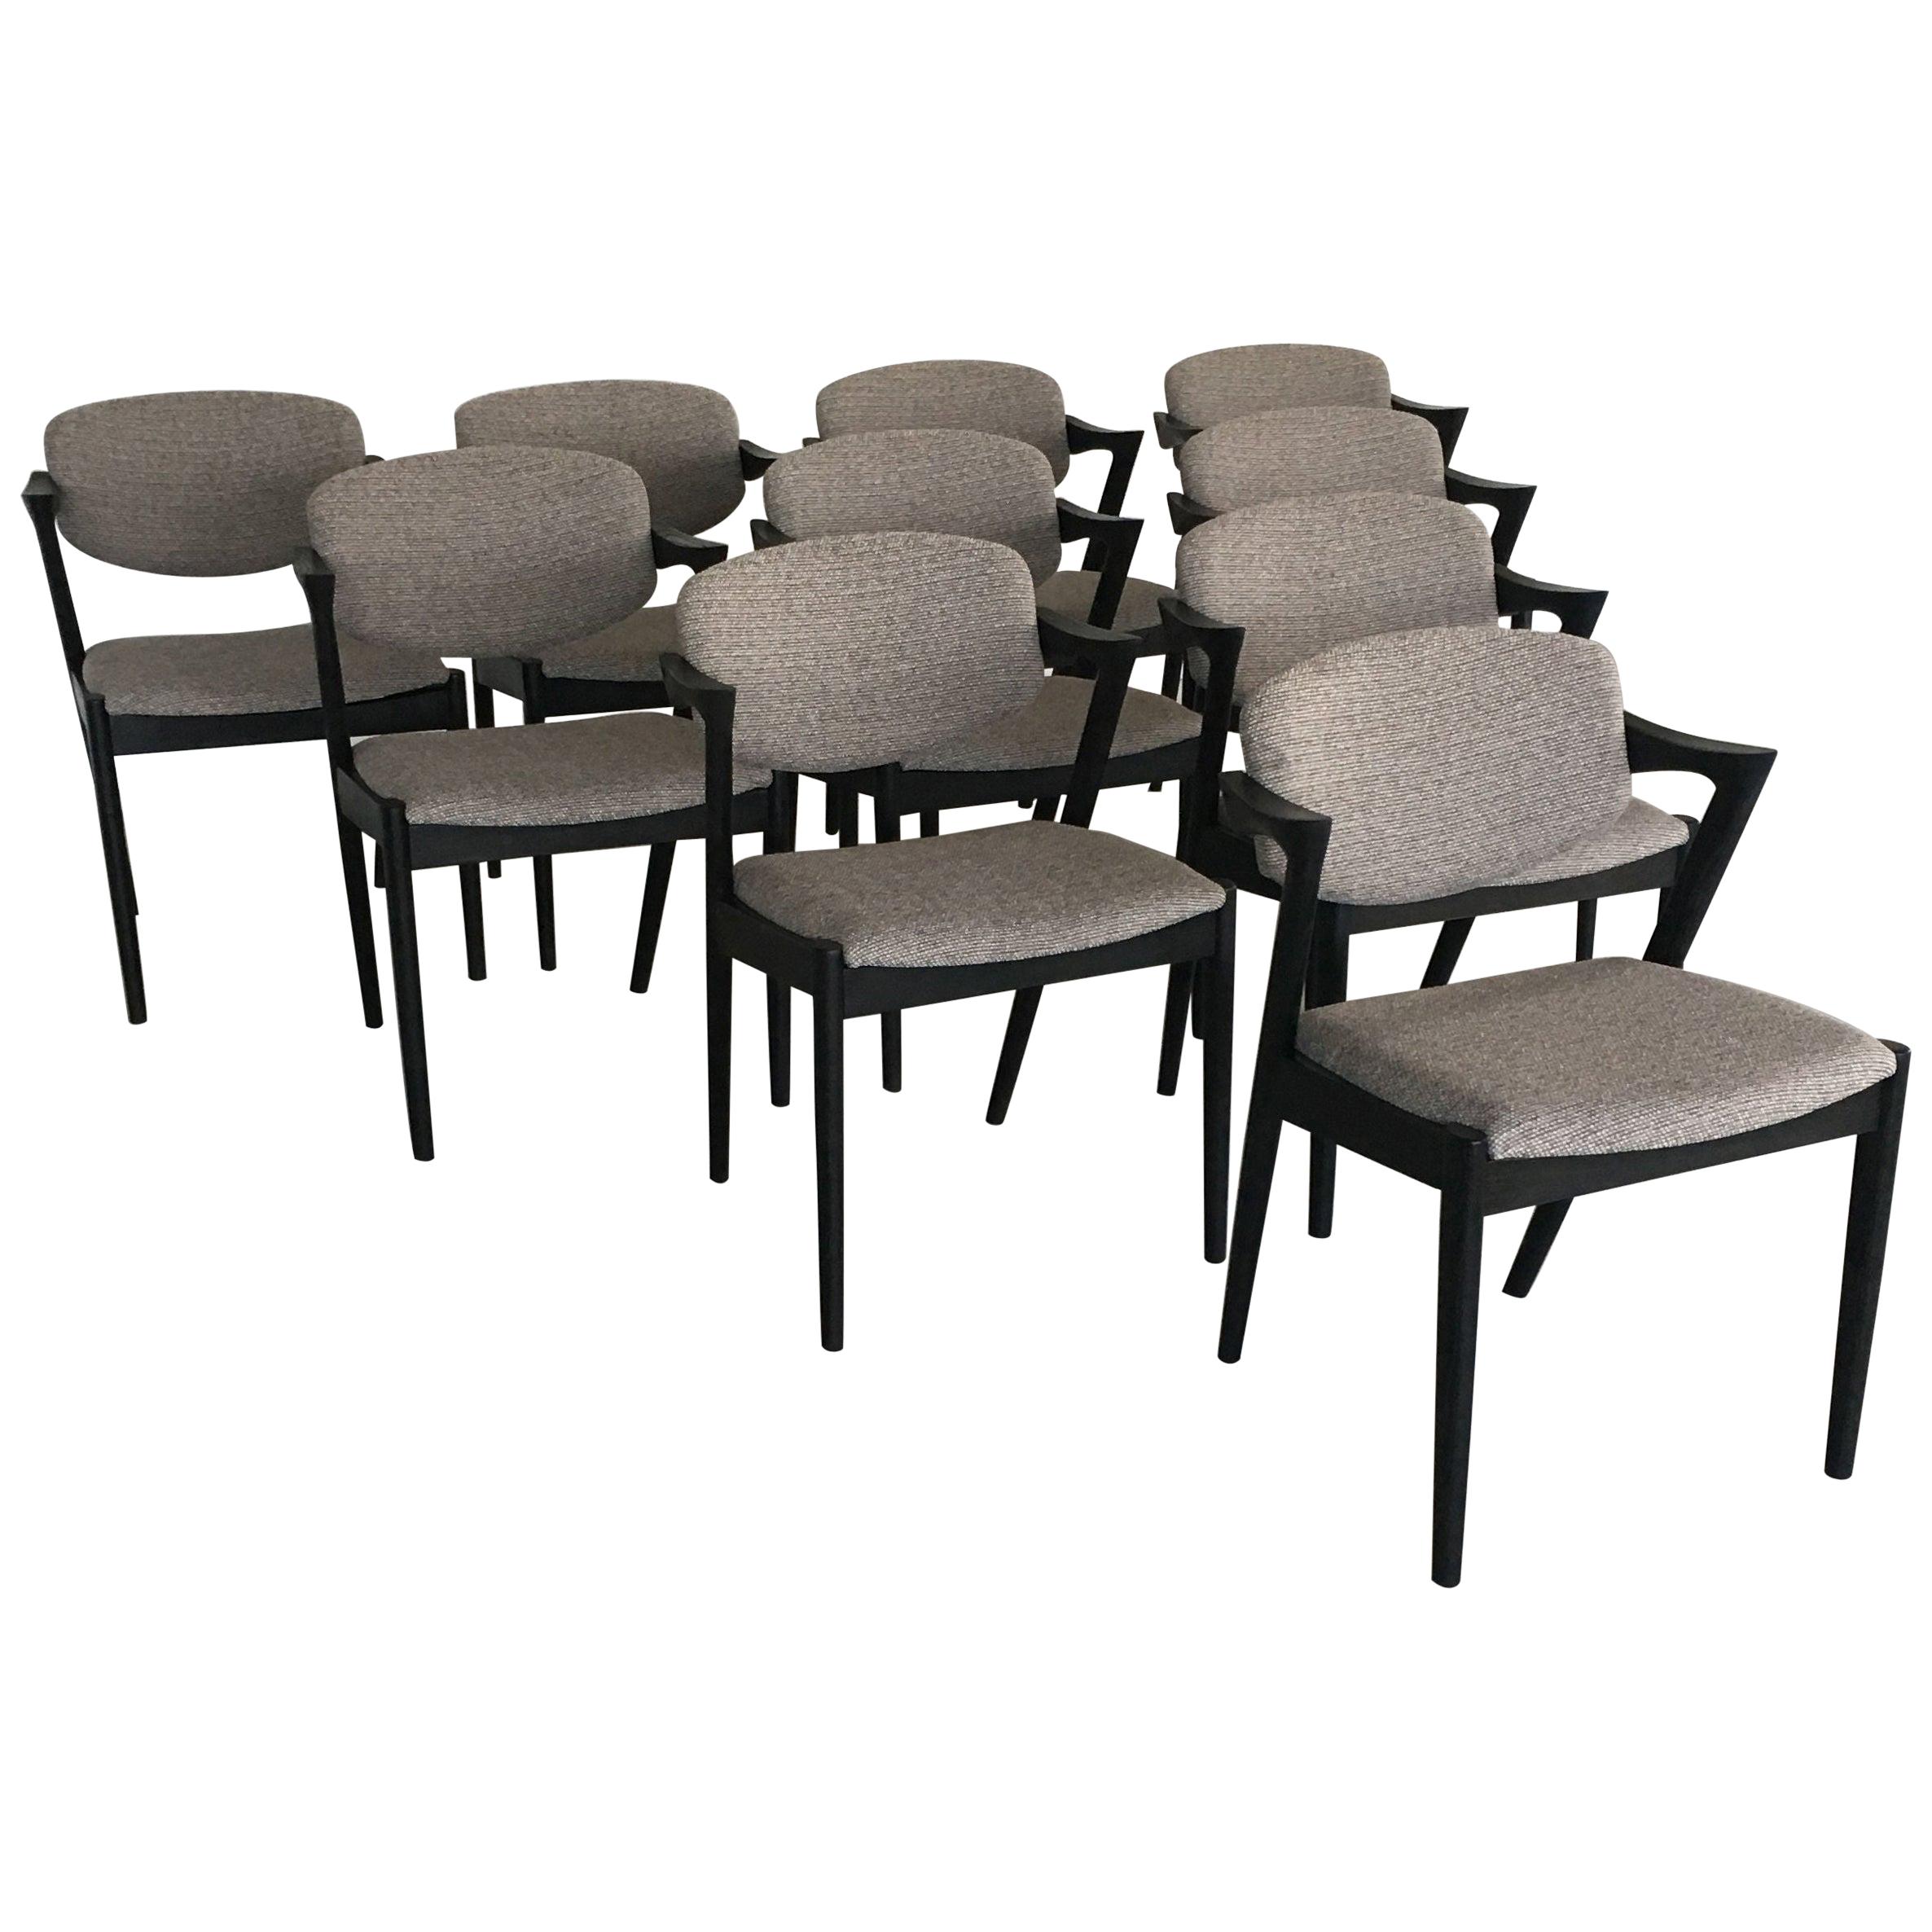 Kai Kristiansen Set of Ten Restored, Ebonized Dining Chairs, Inc. Re-Upholstery